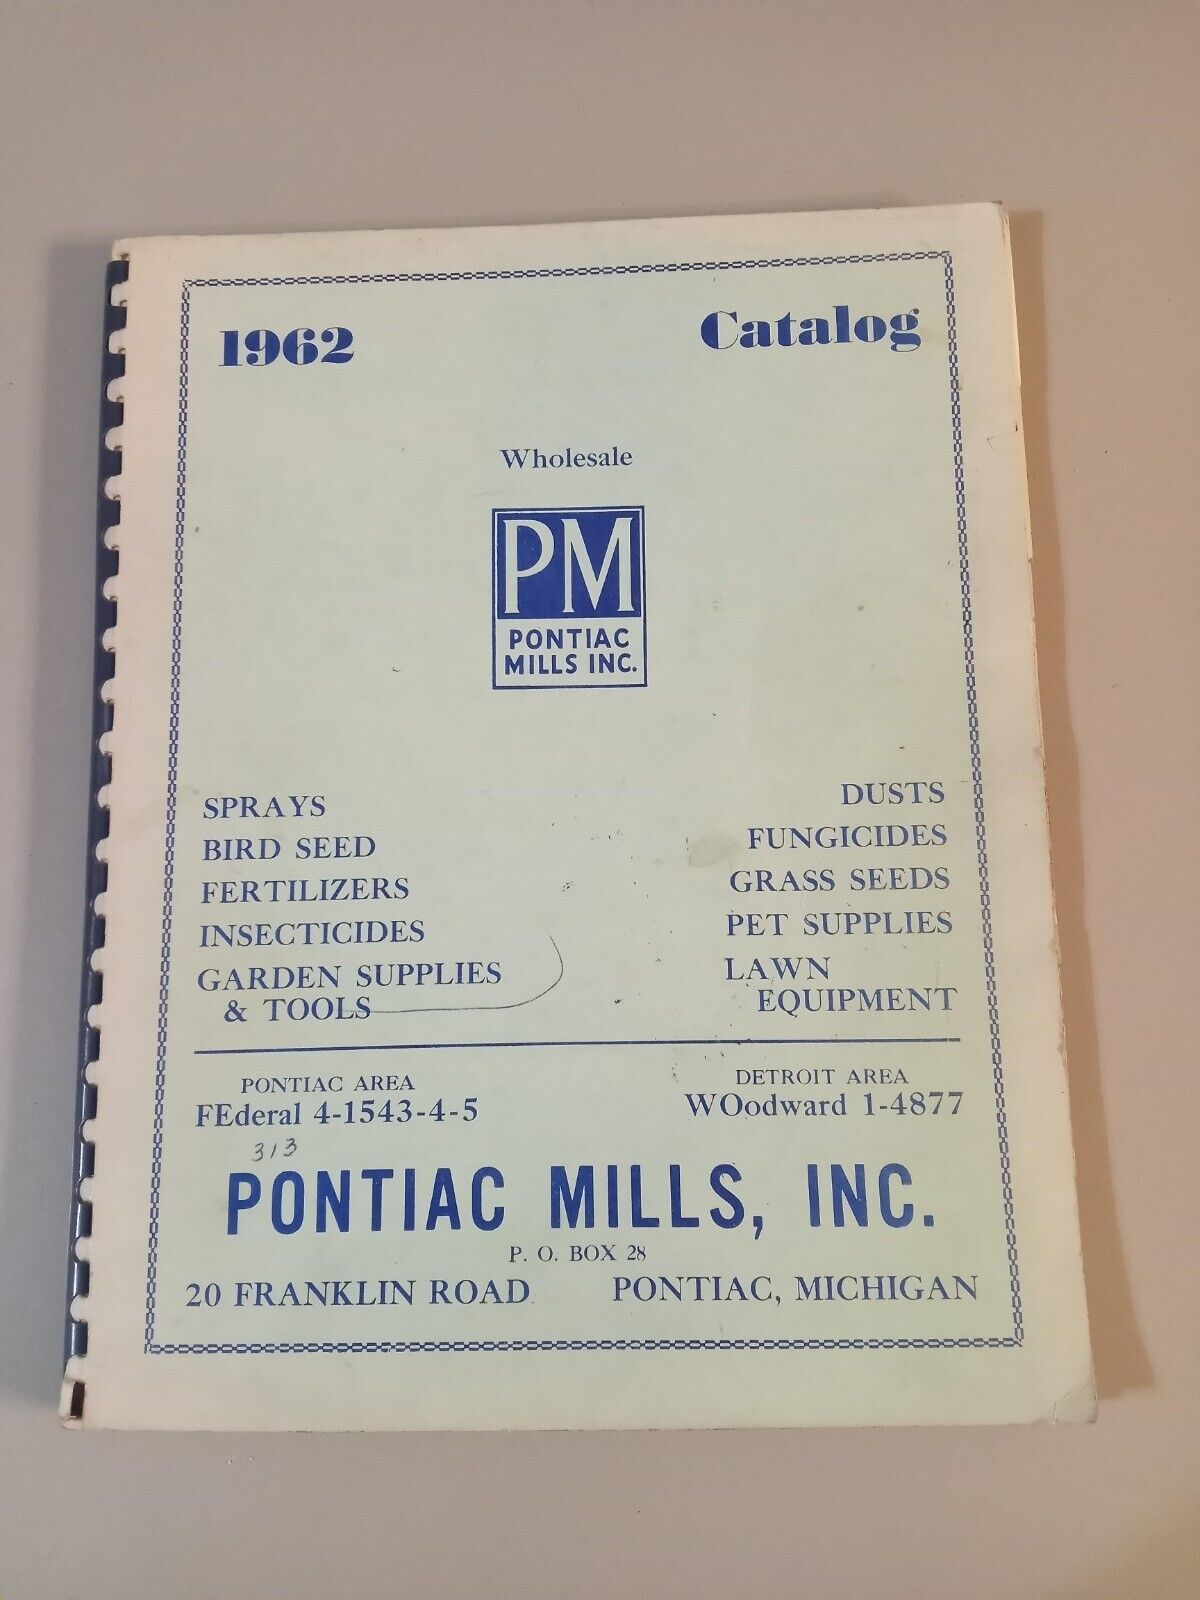 Vintage 1962 PONTIAC MILLS Wholesale Lawn Supply Catalog - Pontiac Michigan